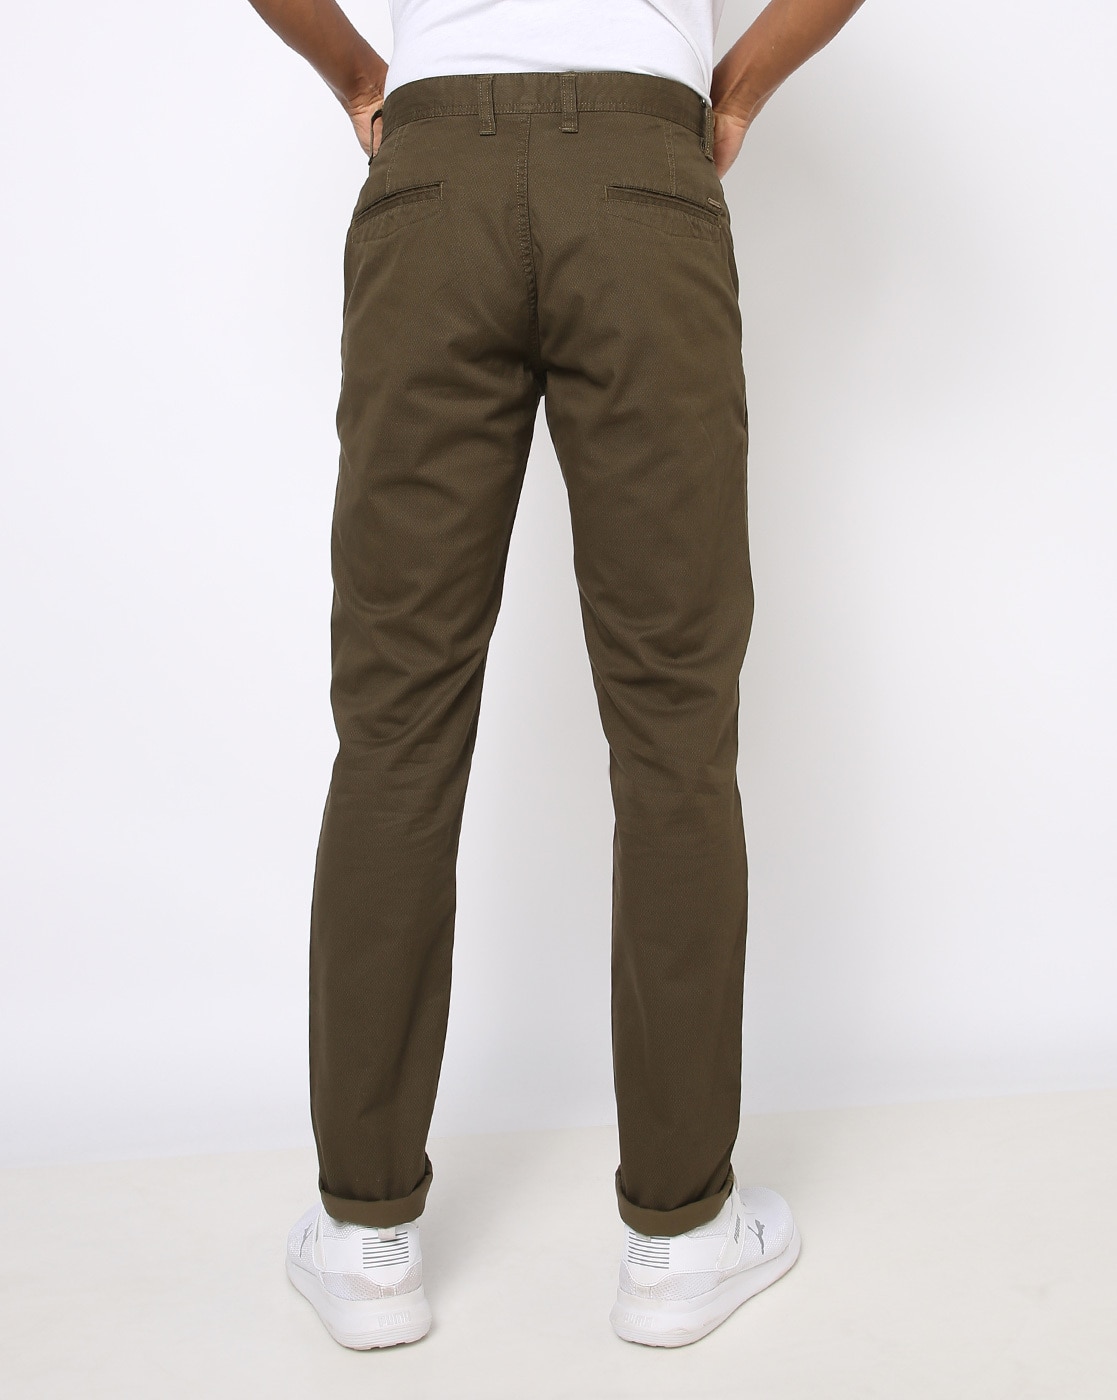 Buy Beige Solid Cotton Lycra Formal Trouser online  Looksgudin